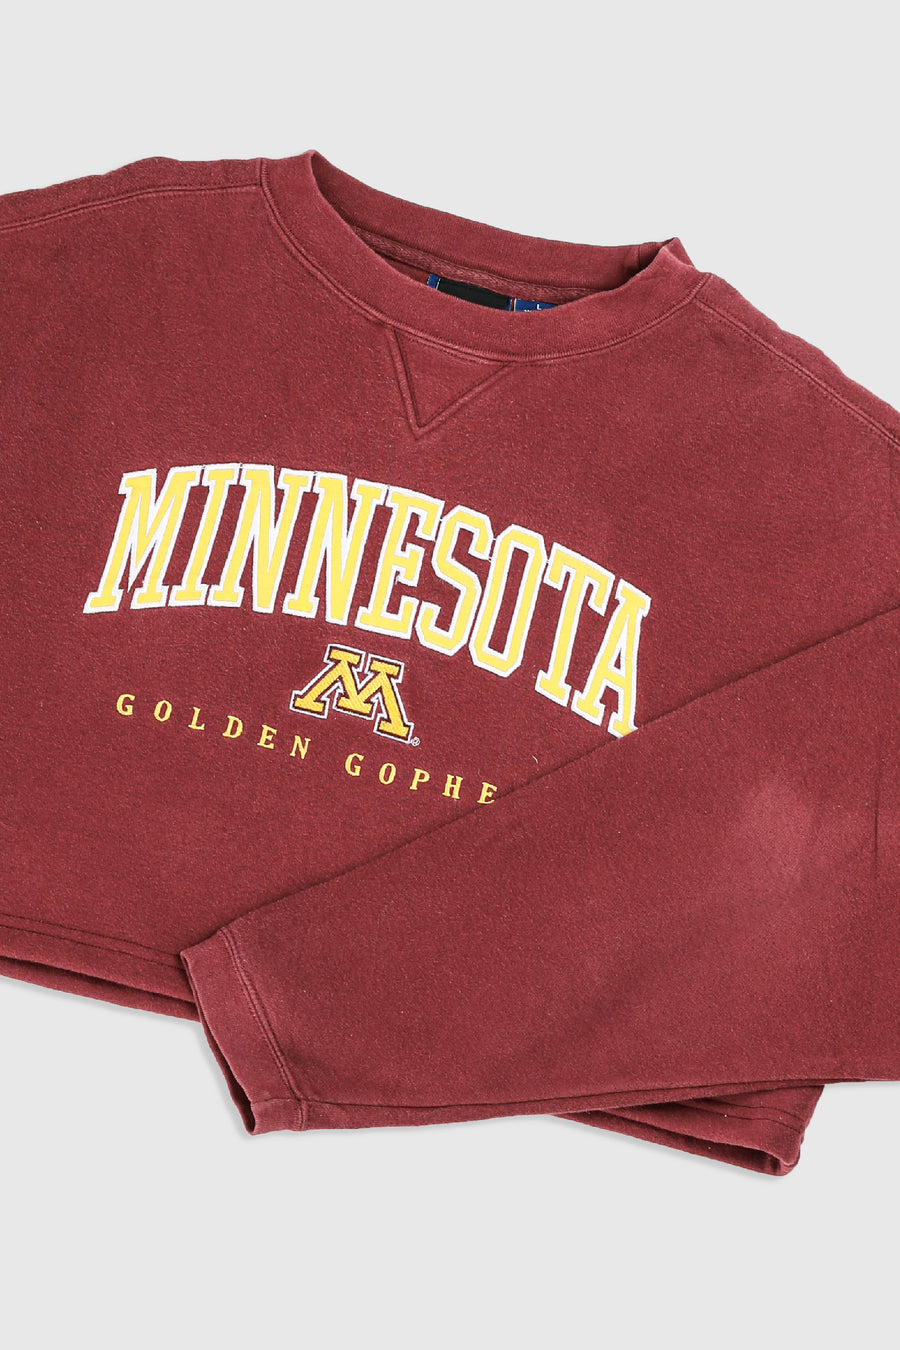 Rework Minnesota Crop Sweatshirt - XL